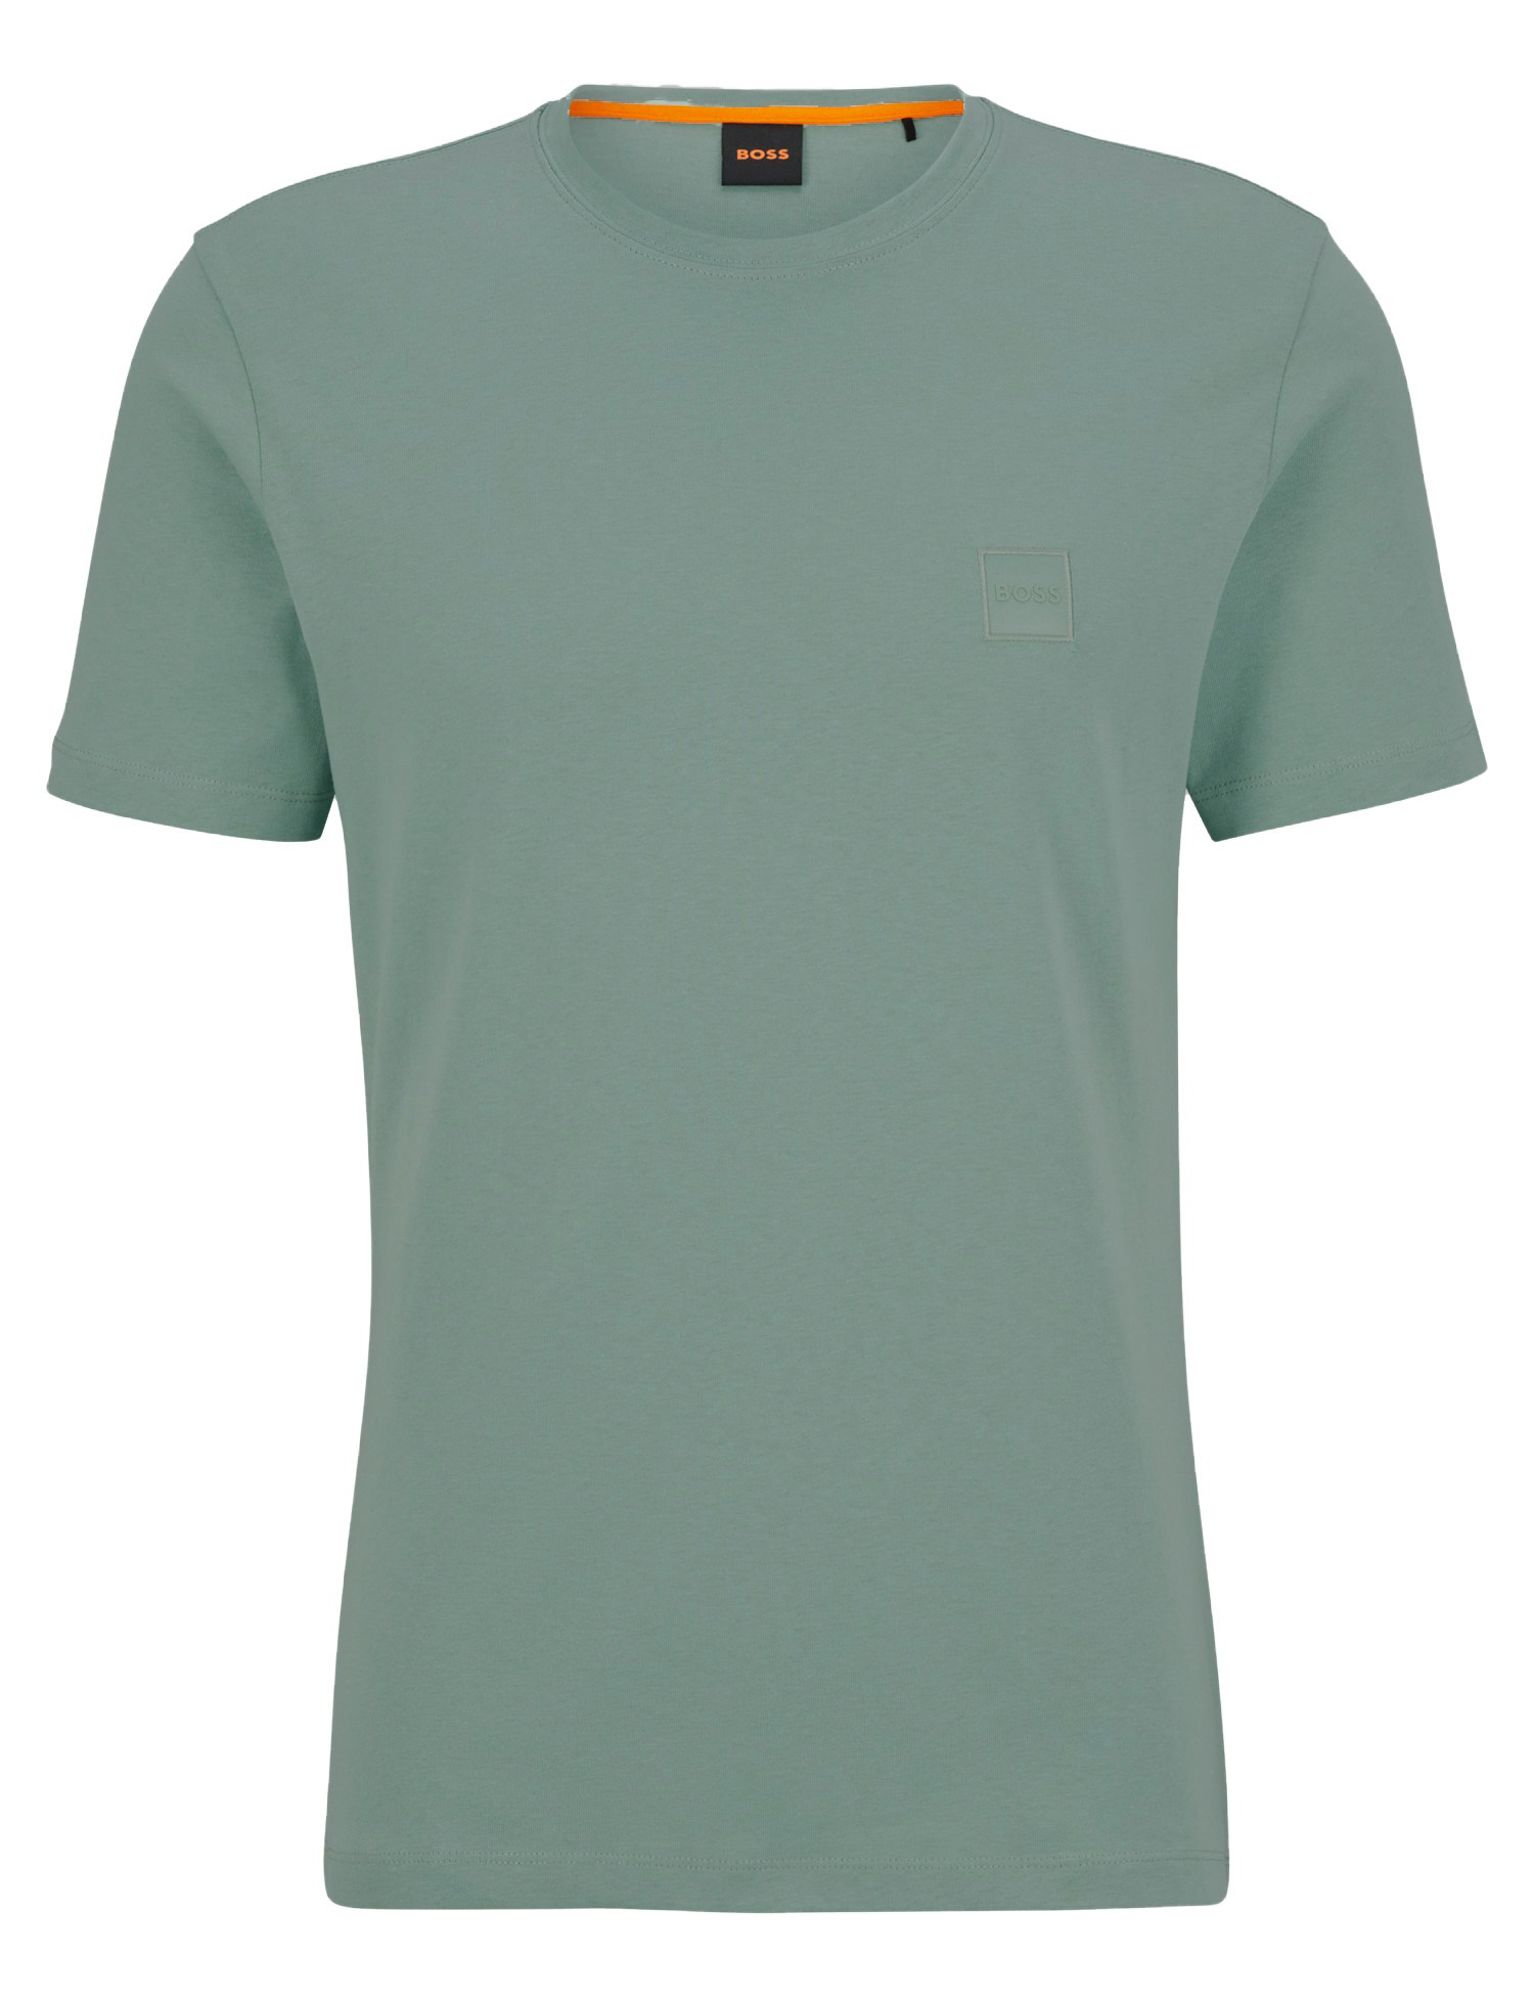 Hugo Boss Menswear Tales T-shirt KM Groen 083371-001-L